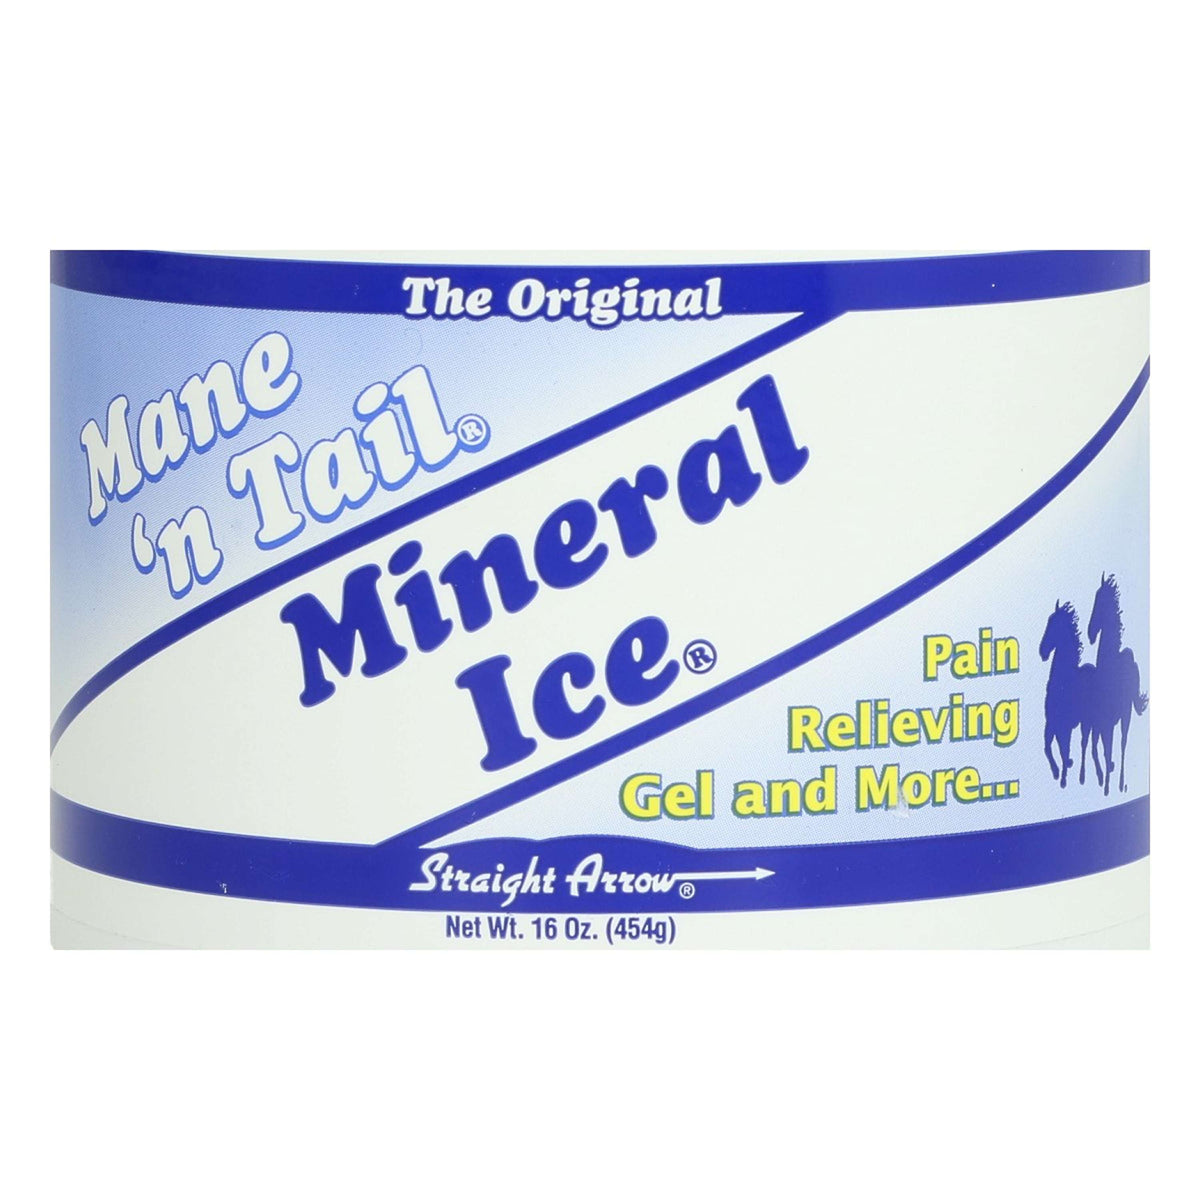 Mane 'n Tail Mineral Ice